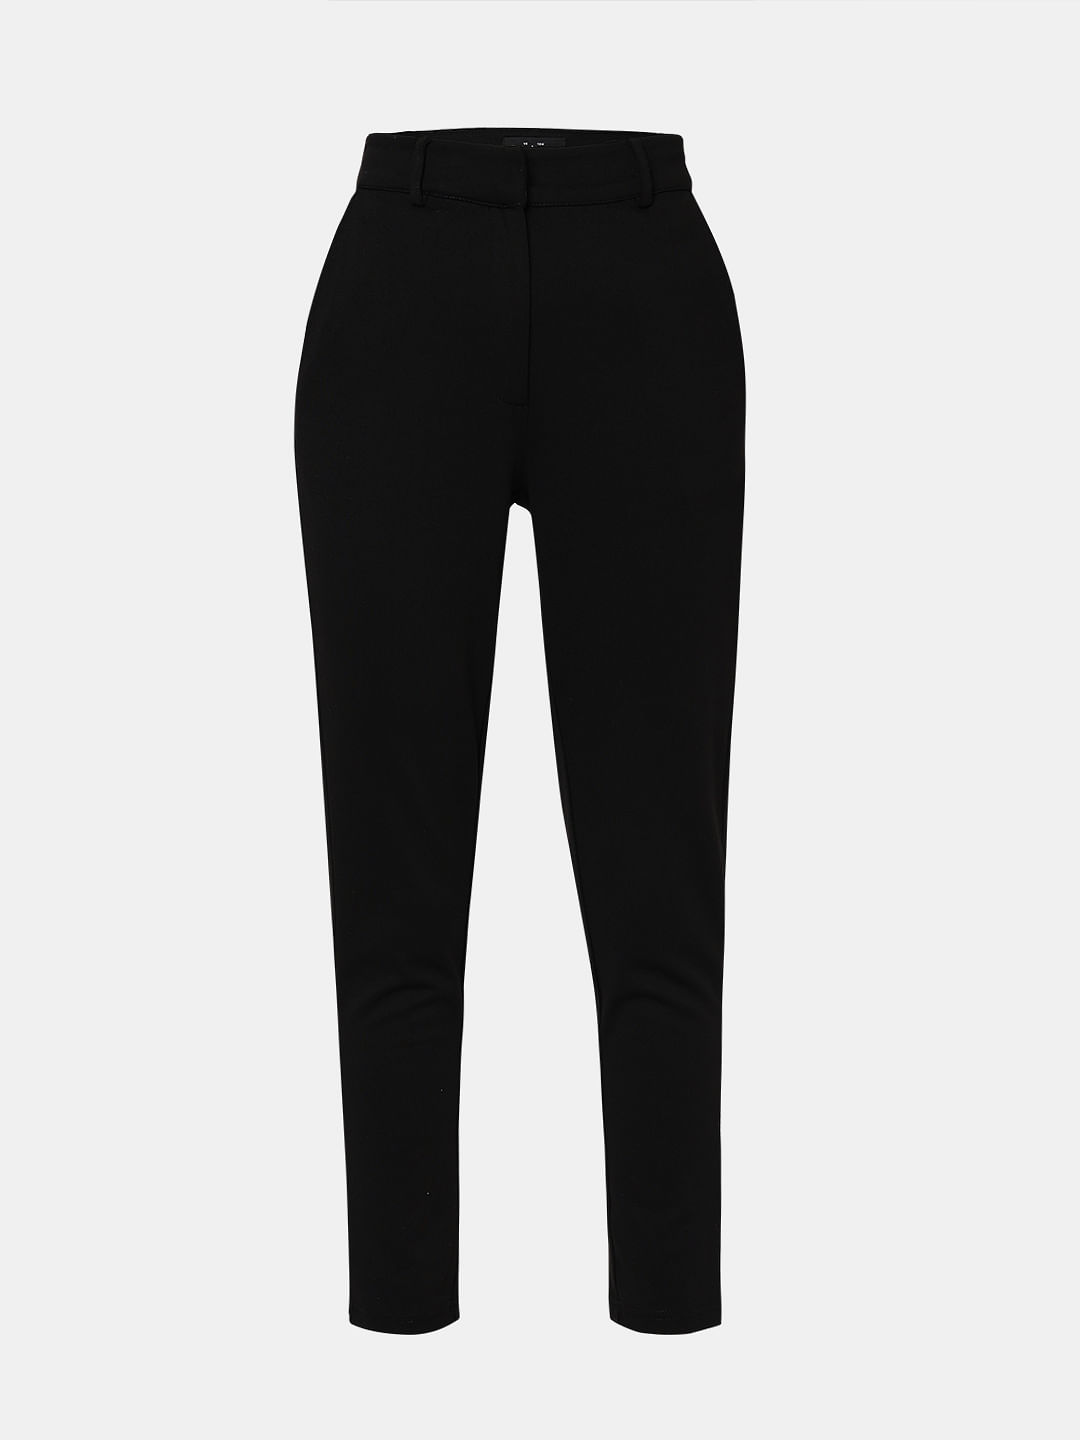 Skinny Slack Black Pants Office wear Business Professional for women's |  Lazada PH